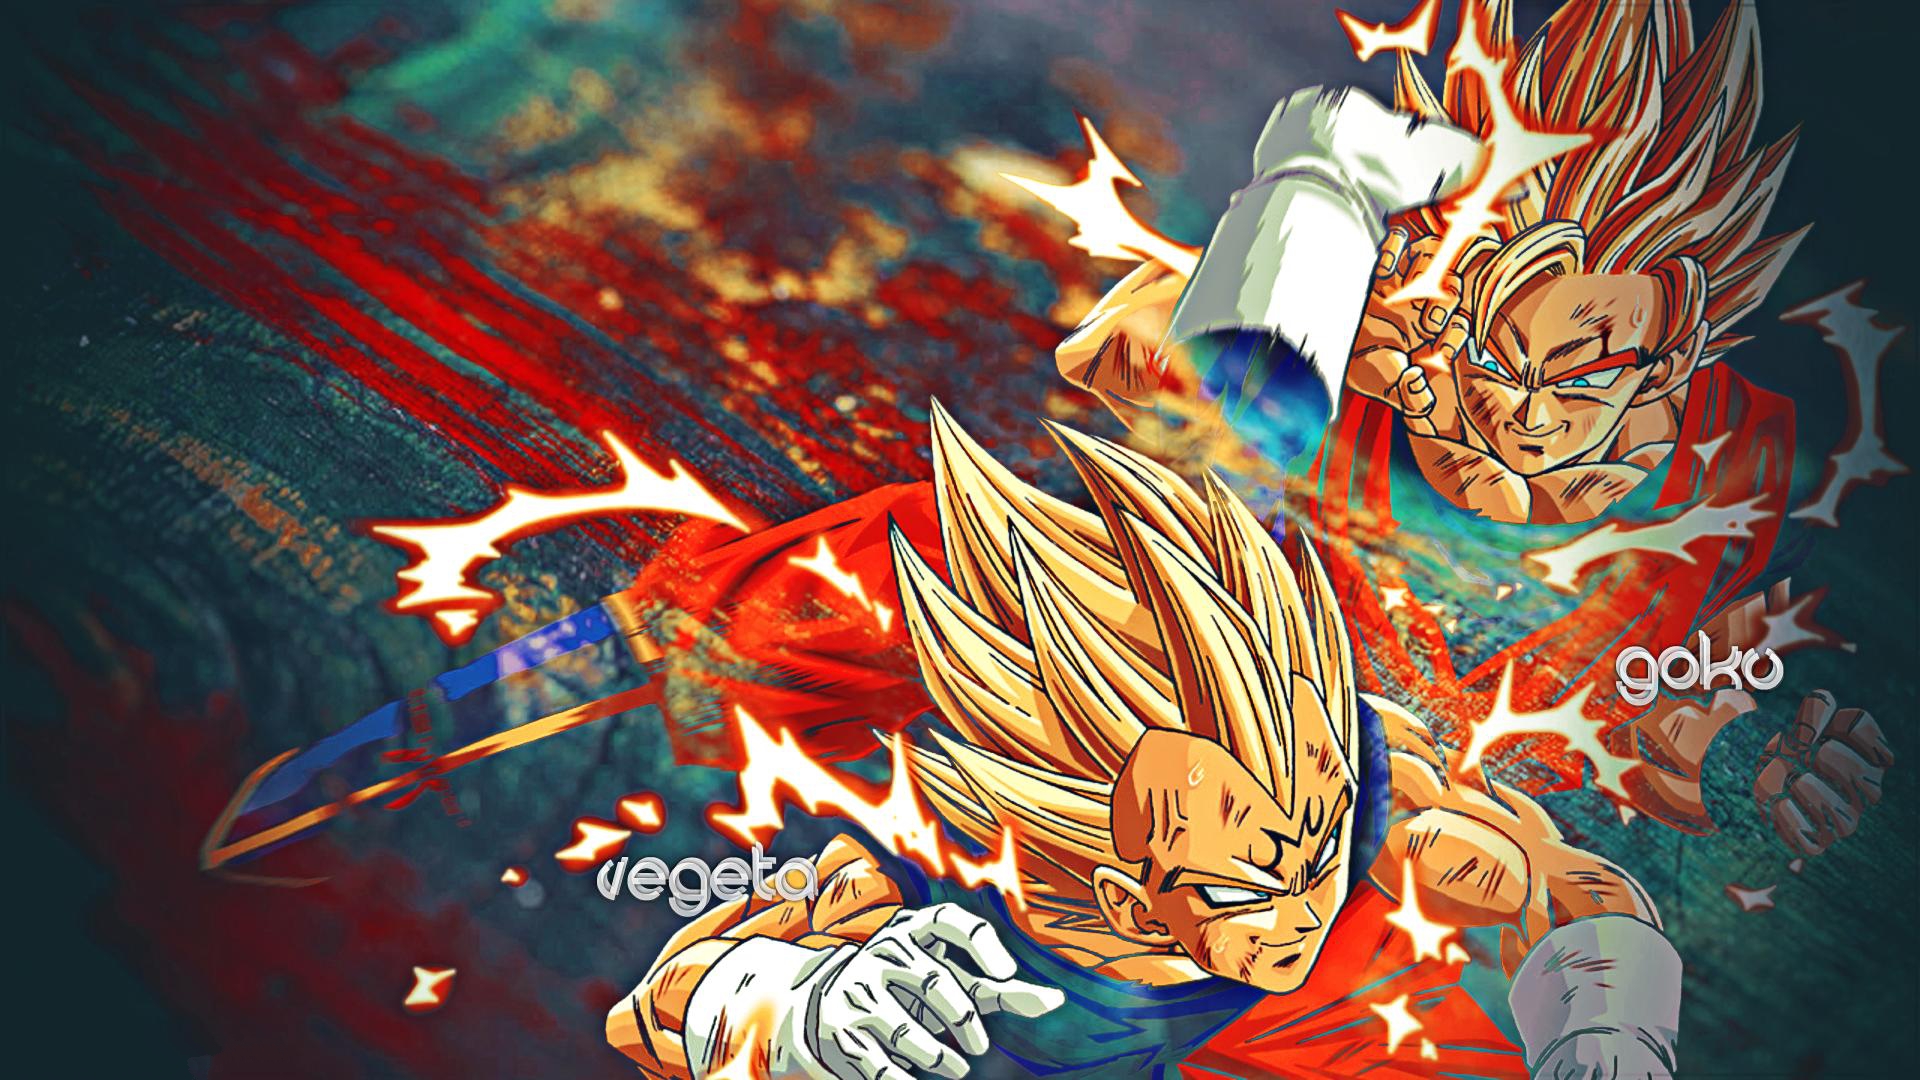 Free Download Goku Dragon Ball Z Backgrounds Pixelstalknet